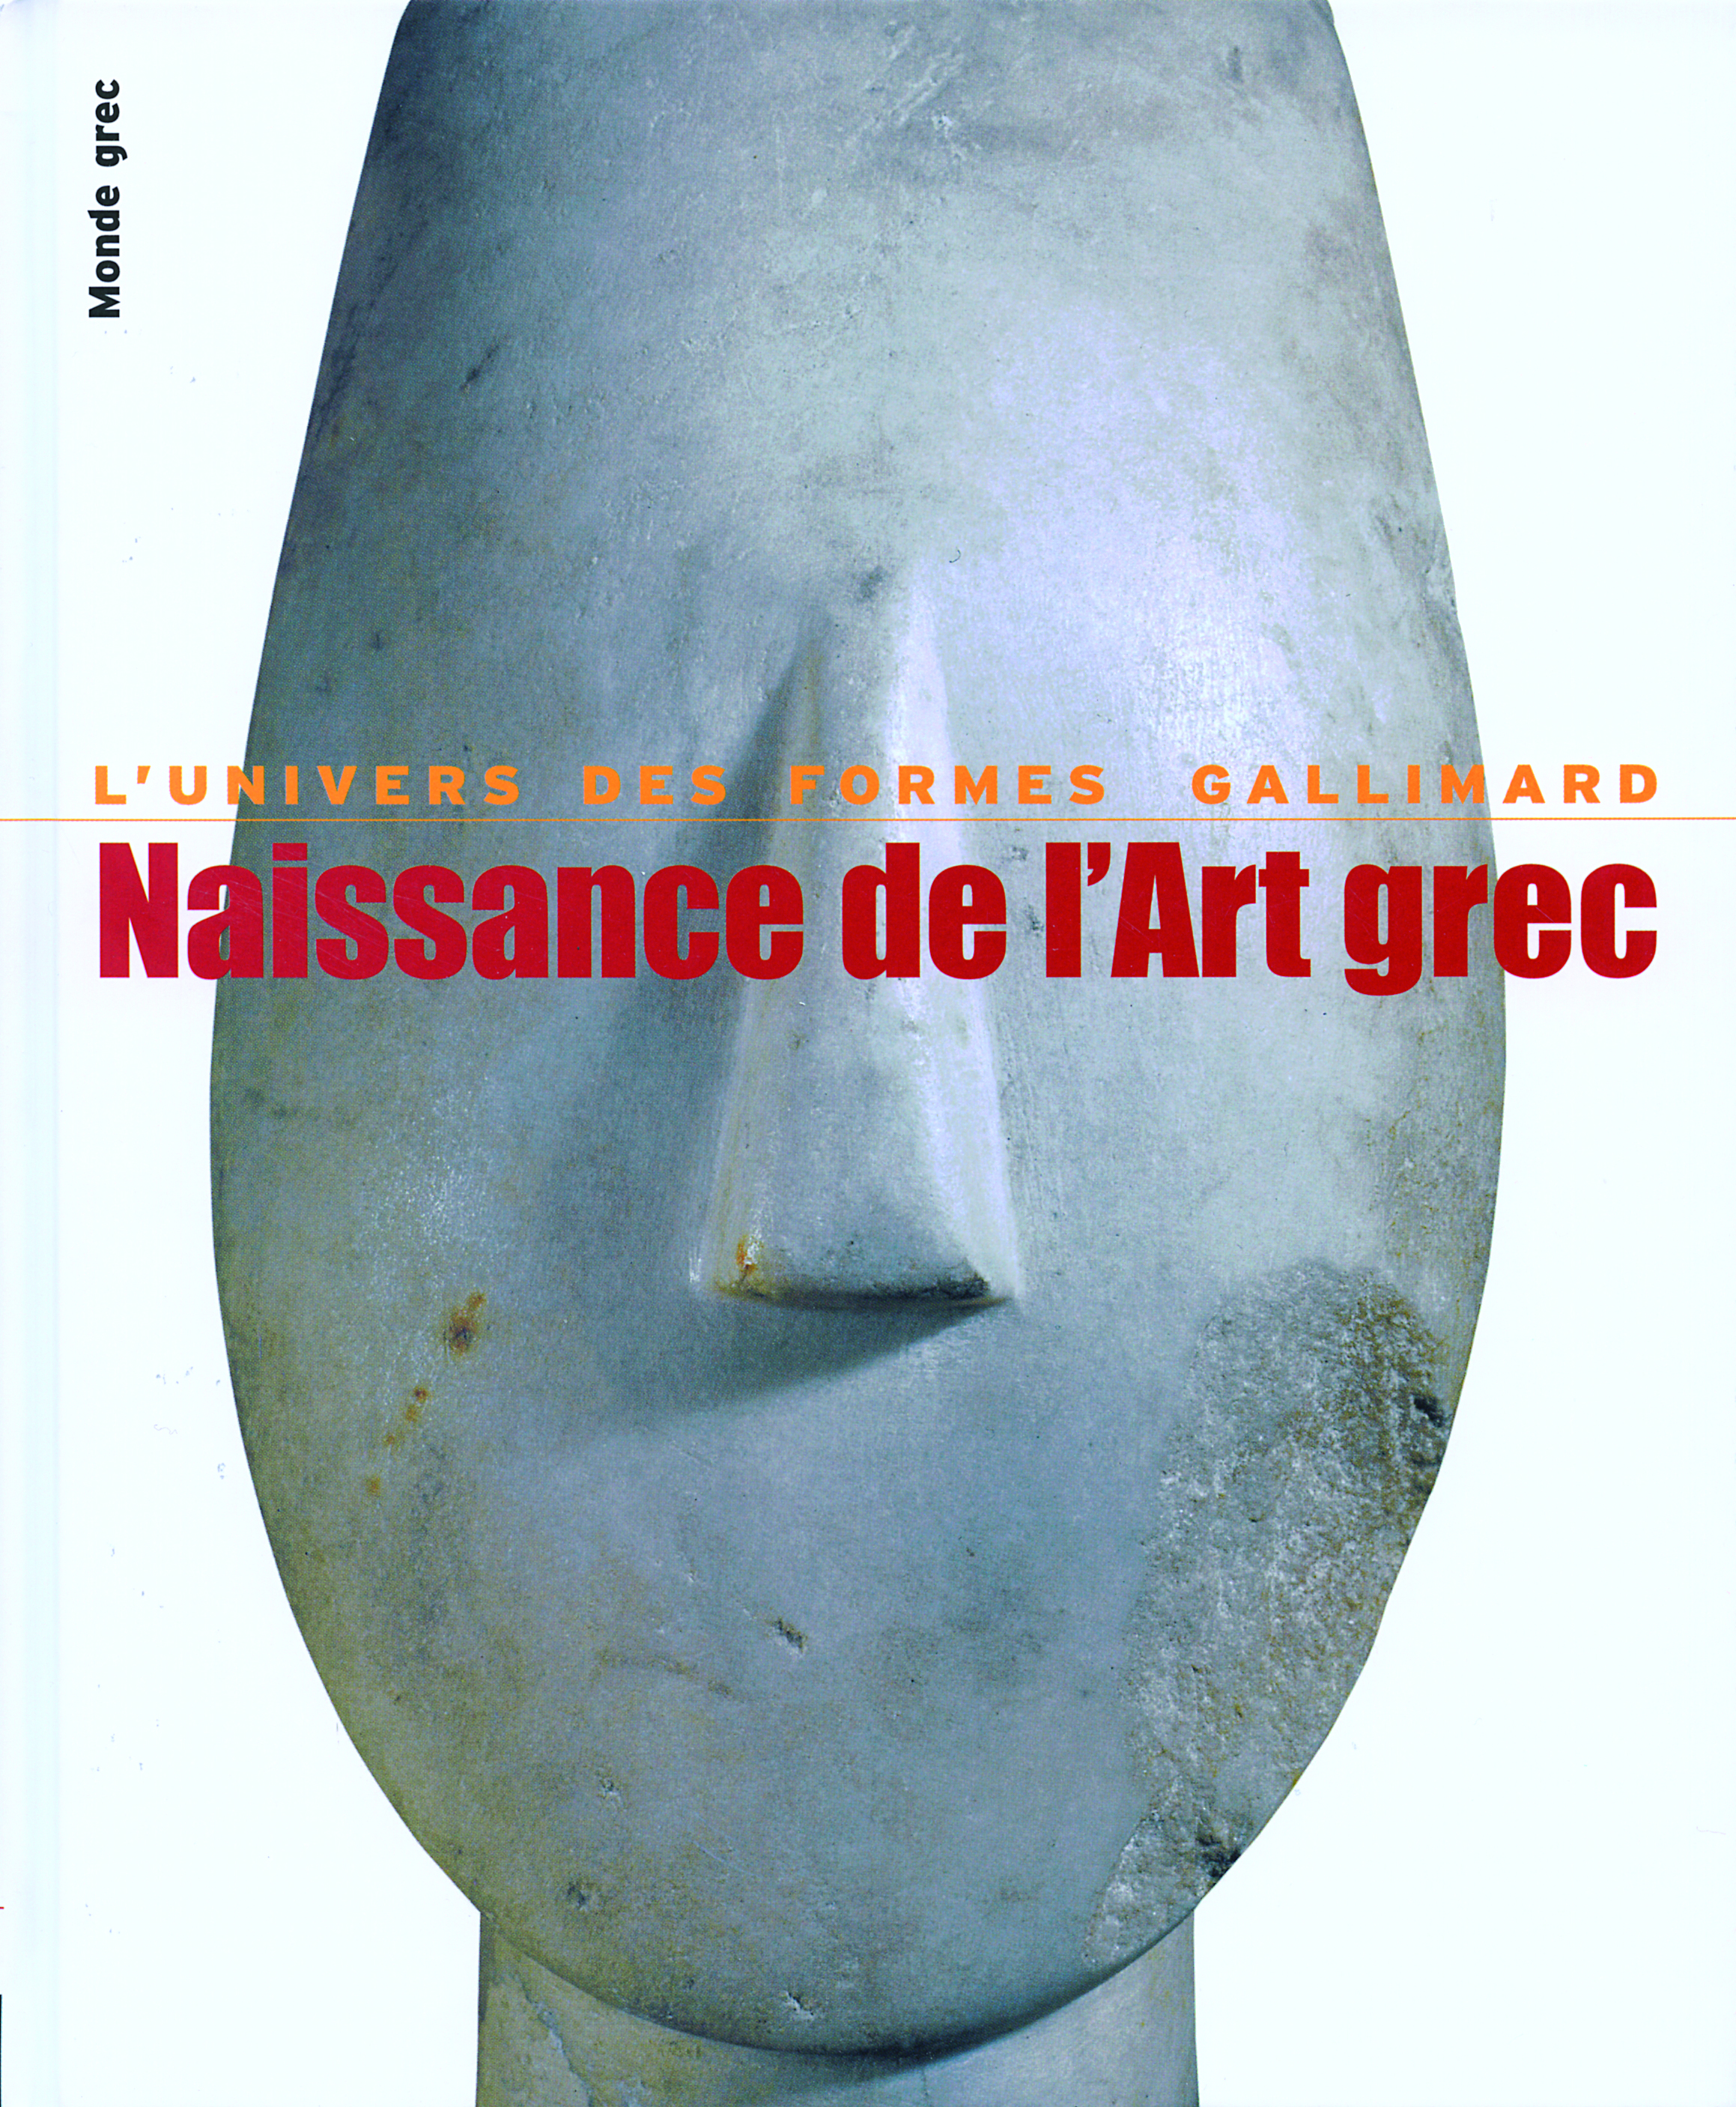 Naissance de l'art grec (9782070118861-front-cover)